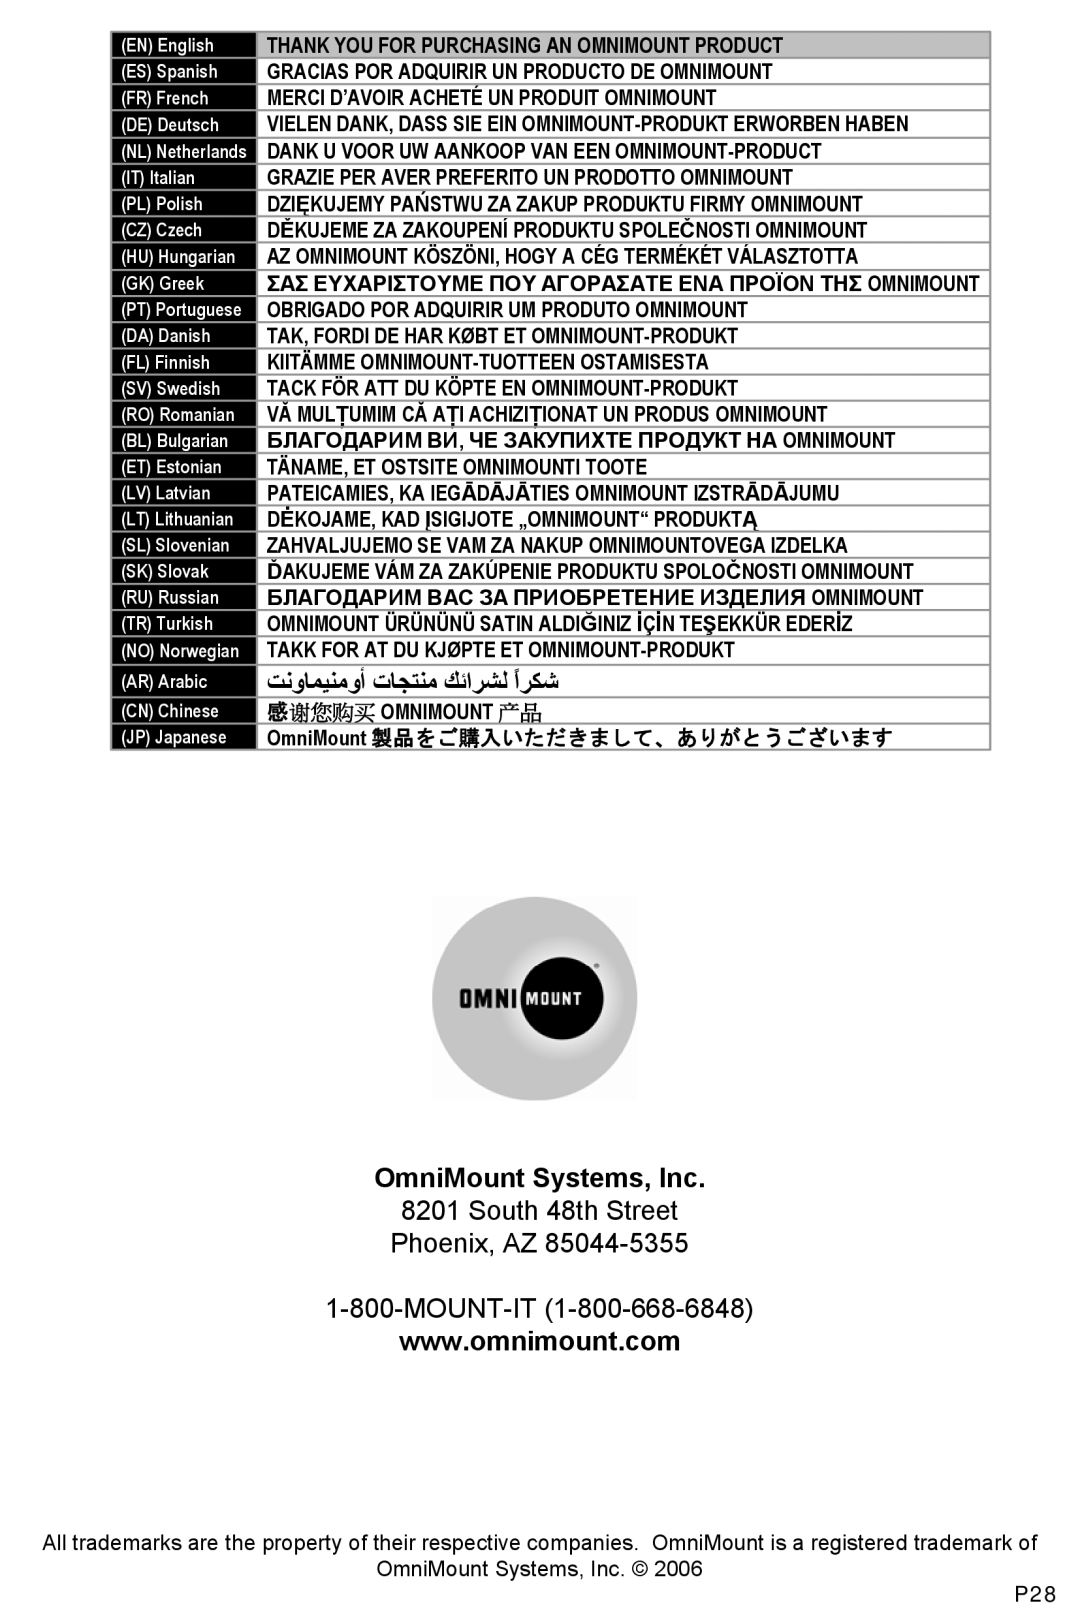 Omnimount U3-F manual OmniMount Systems, Inc, ﺖﻧوﺎﻤﻴﻨﻣوأ تﺎﺠﺘﻨﻣ ﻚﺋاﺮﺸﻟ اﺮﻜﺷً, South 48th Street Phoenix, AZ 1-800-MOUNT-IT 